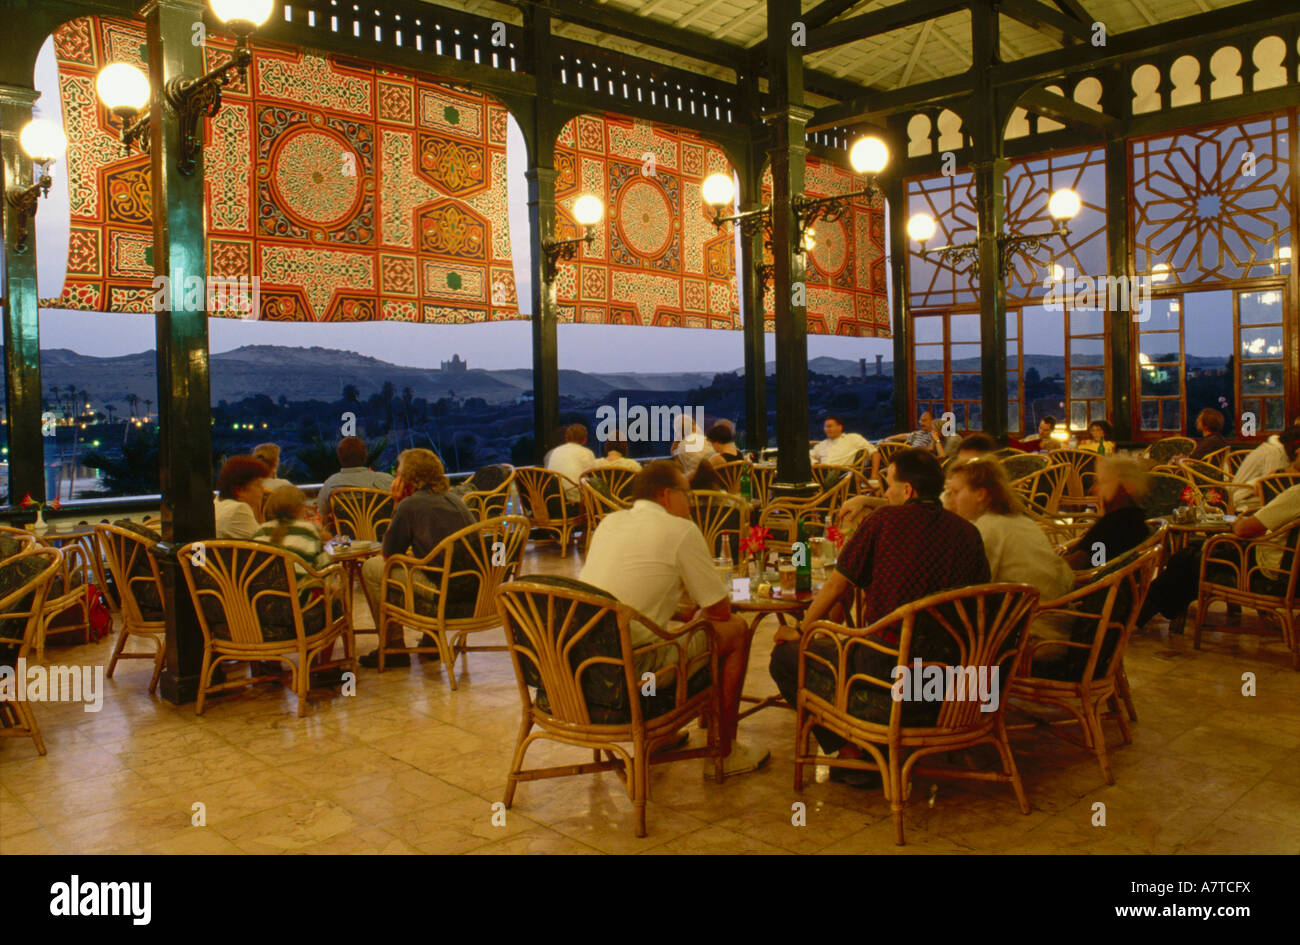 Interiors of restaurant Aswan Egypt Stock Photo